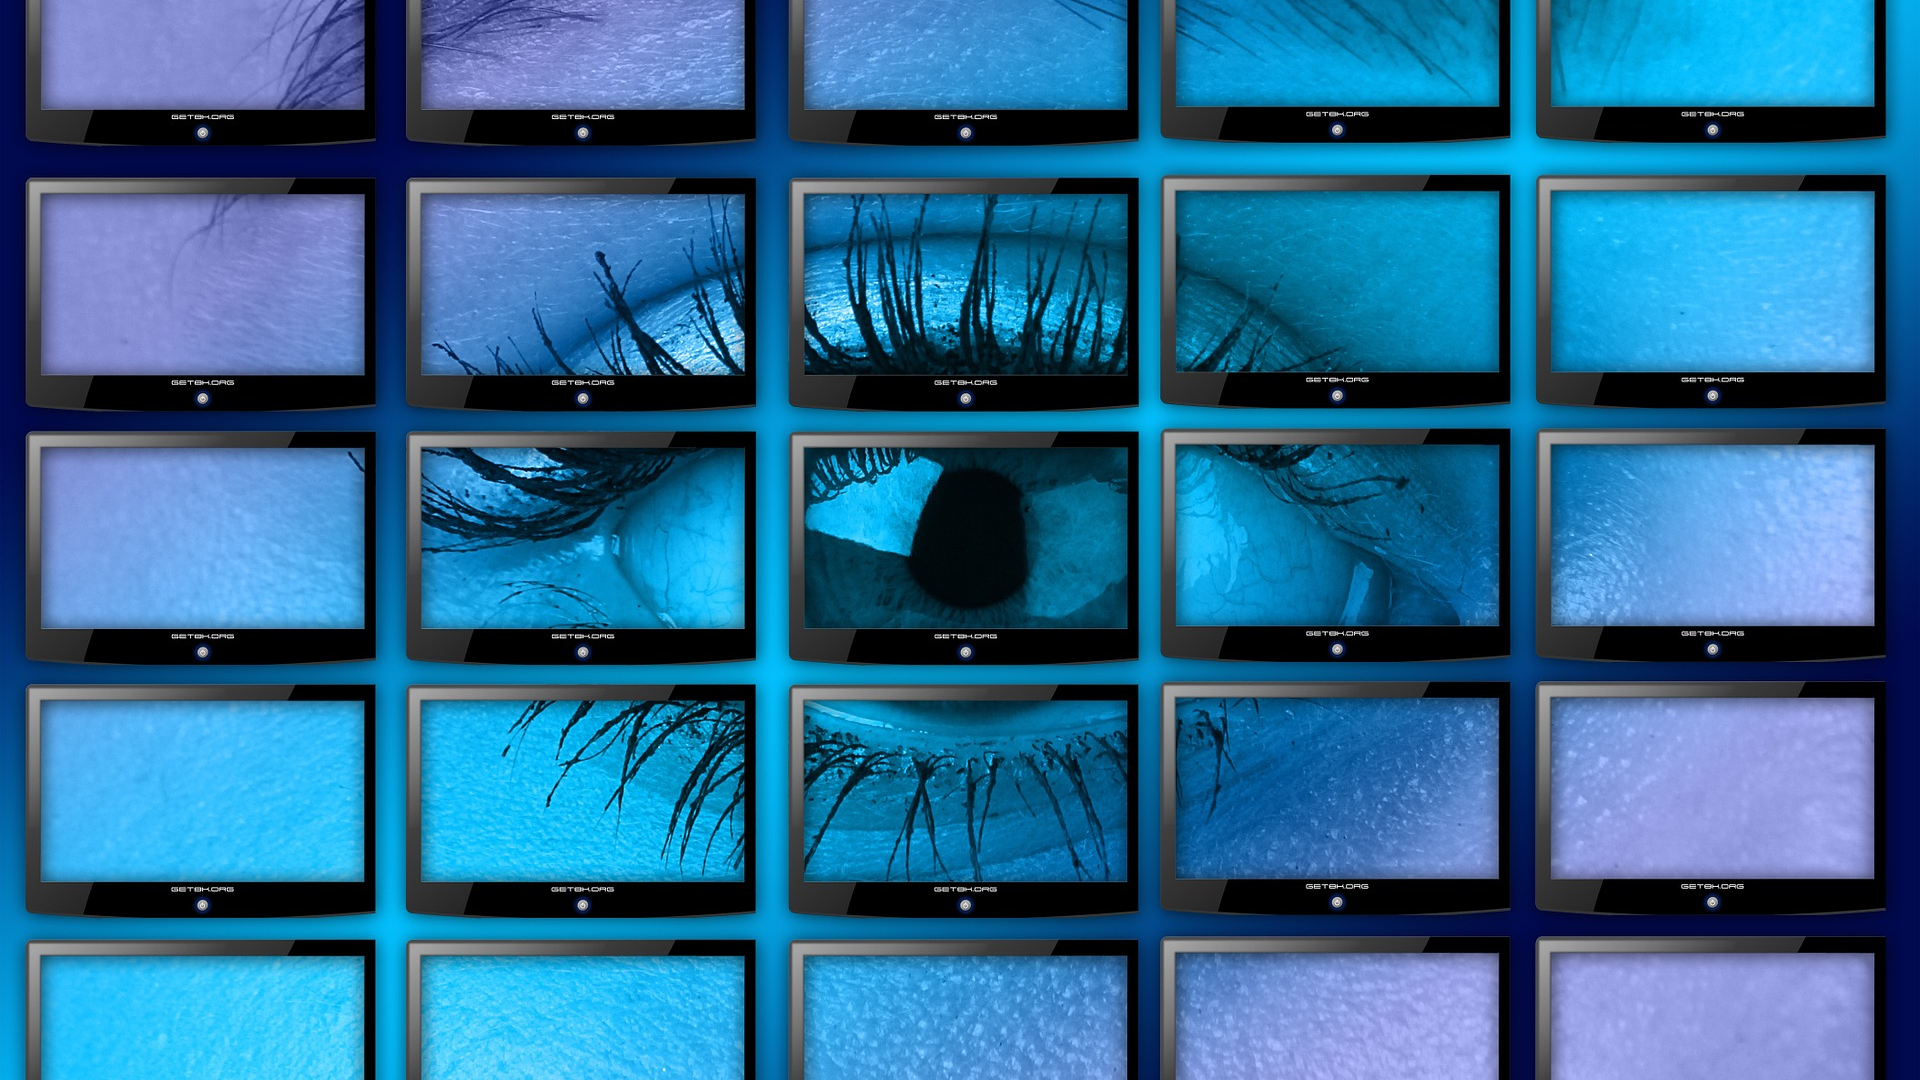 Eye Displayed through Monitor Images (Public Domain Image)